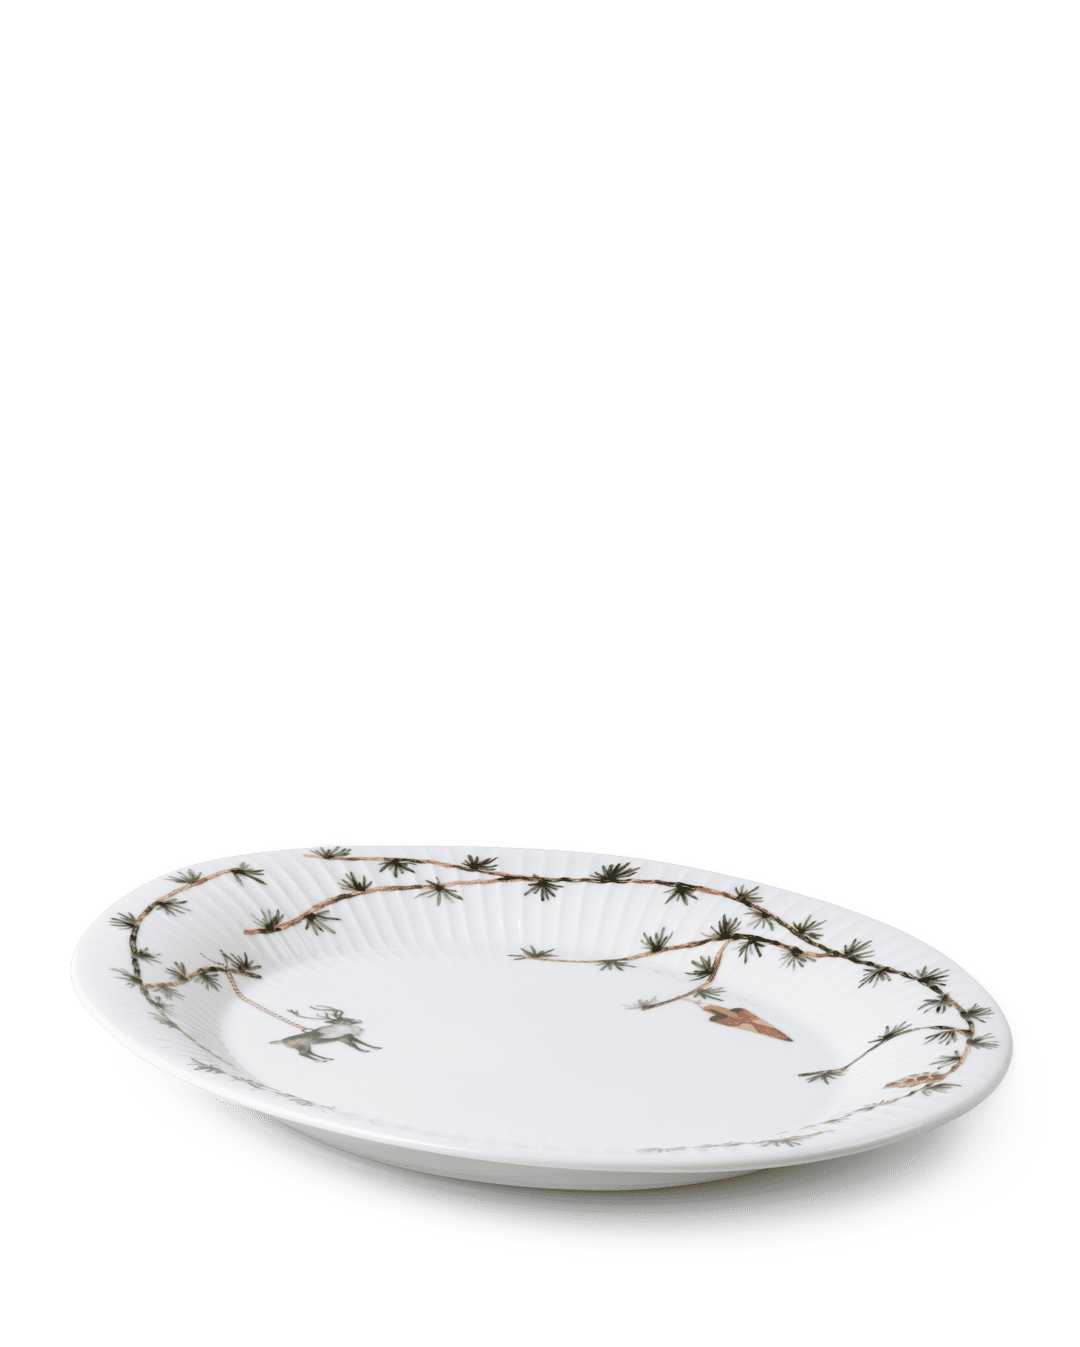 Hammershøi Christmas Oval dish white w. deco 47x27cm H: 1.4" W: 13.4" D: 10.6" Ø: 10.6